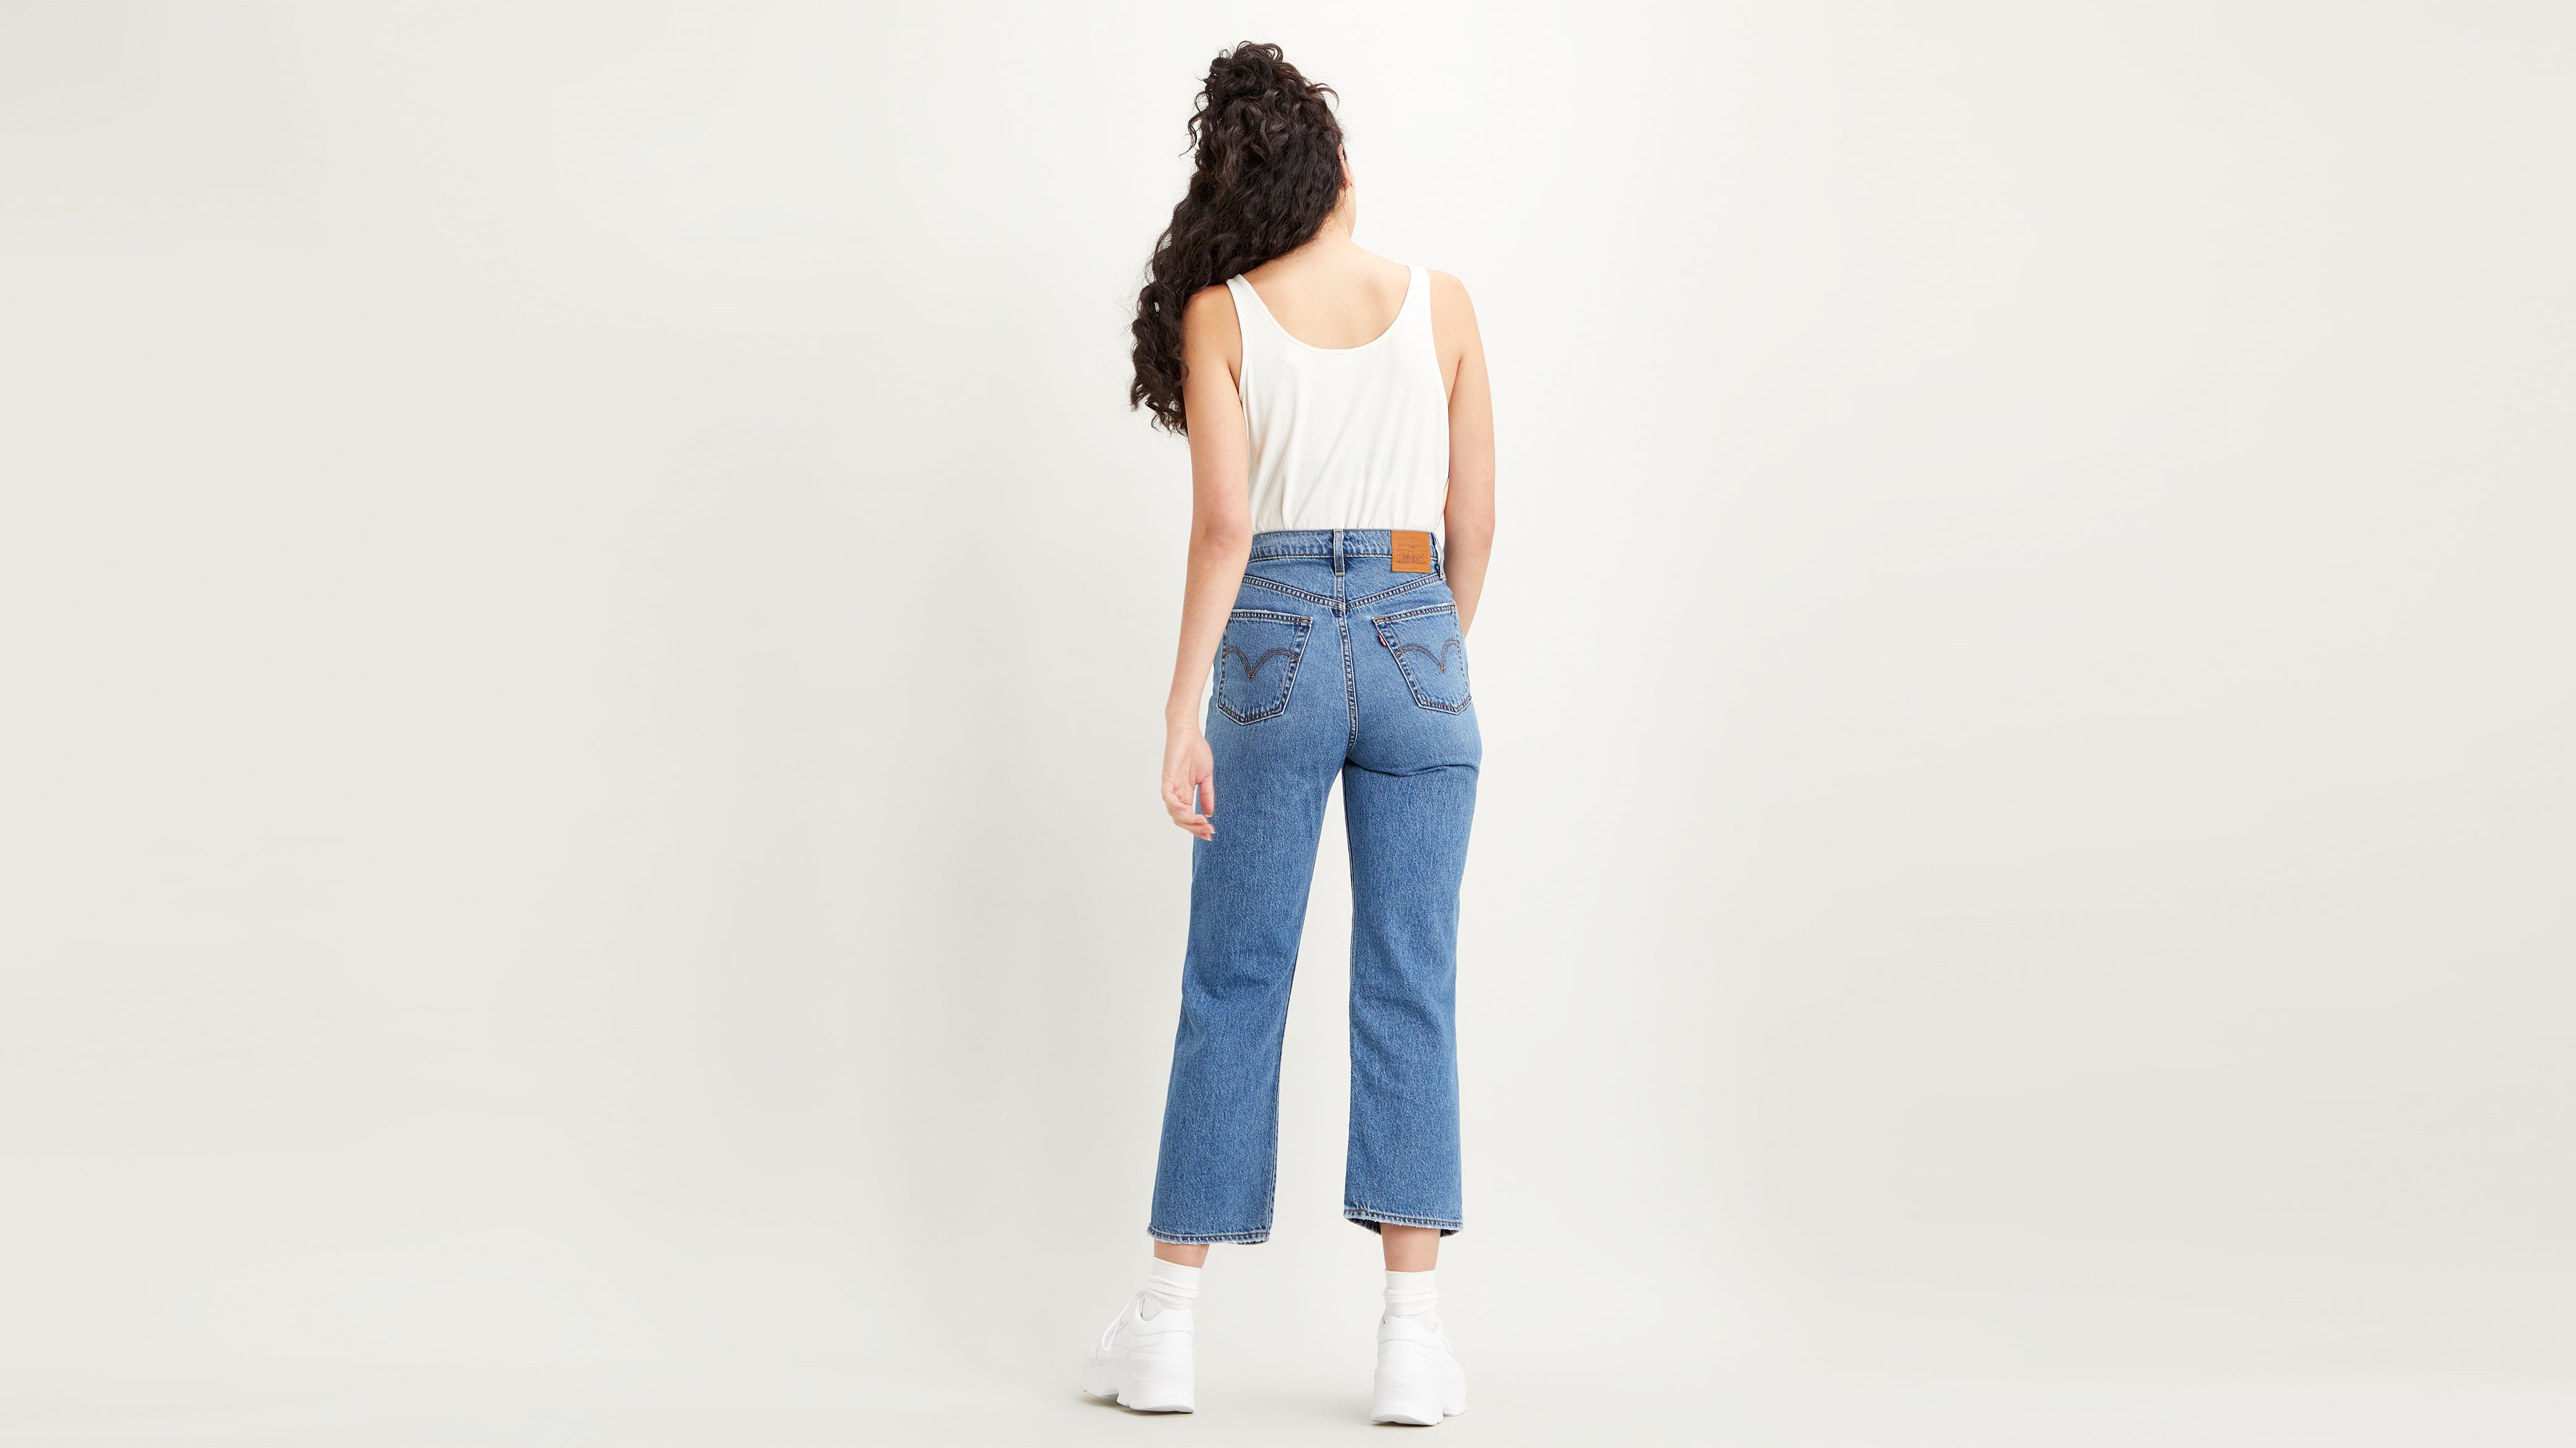 levi's women's ribcage jeans